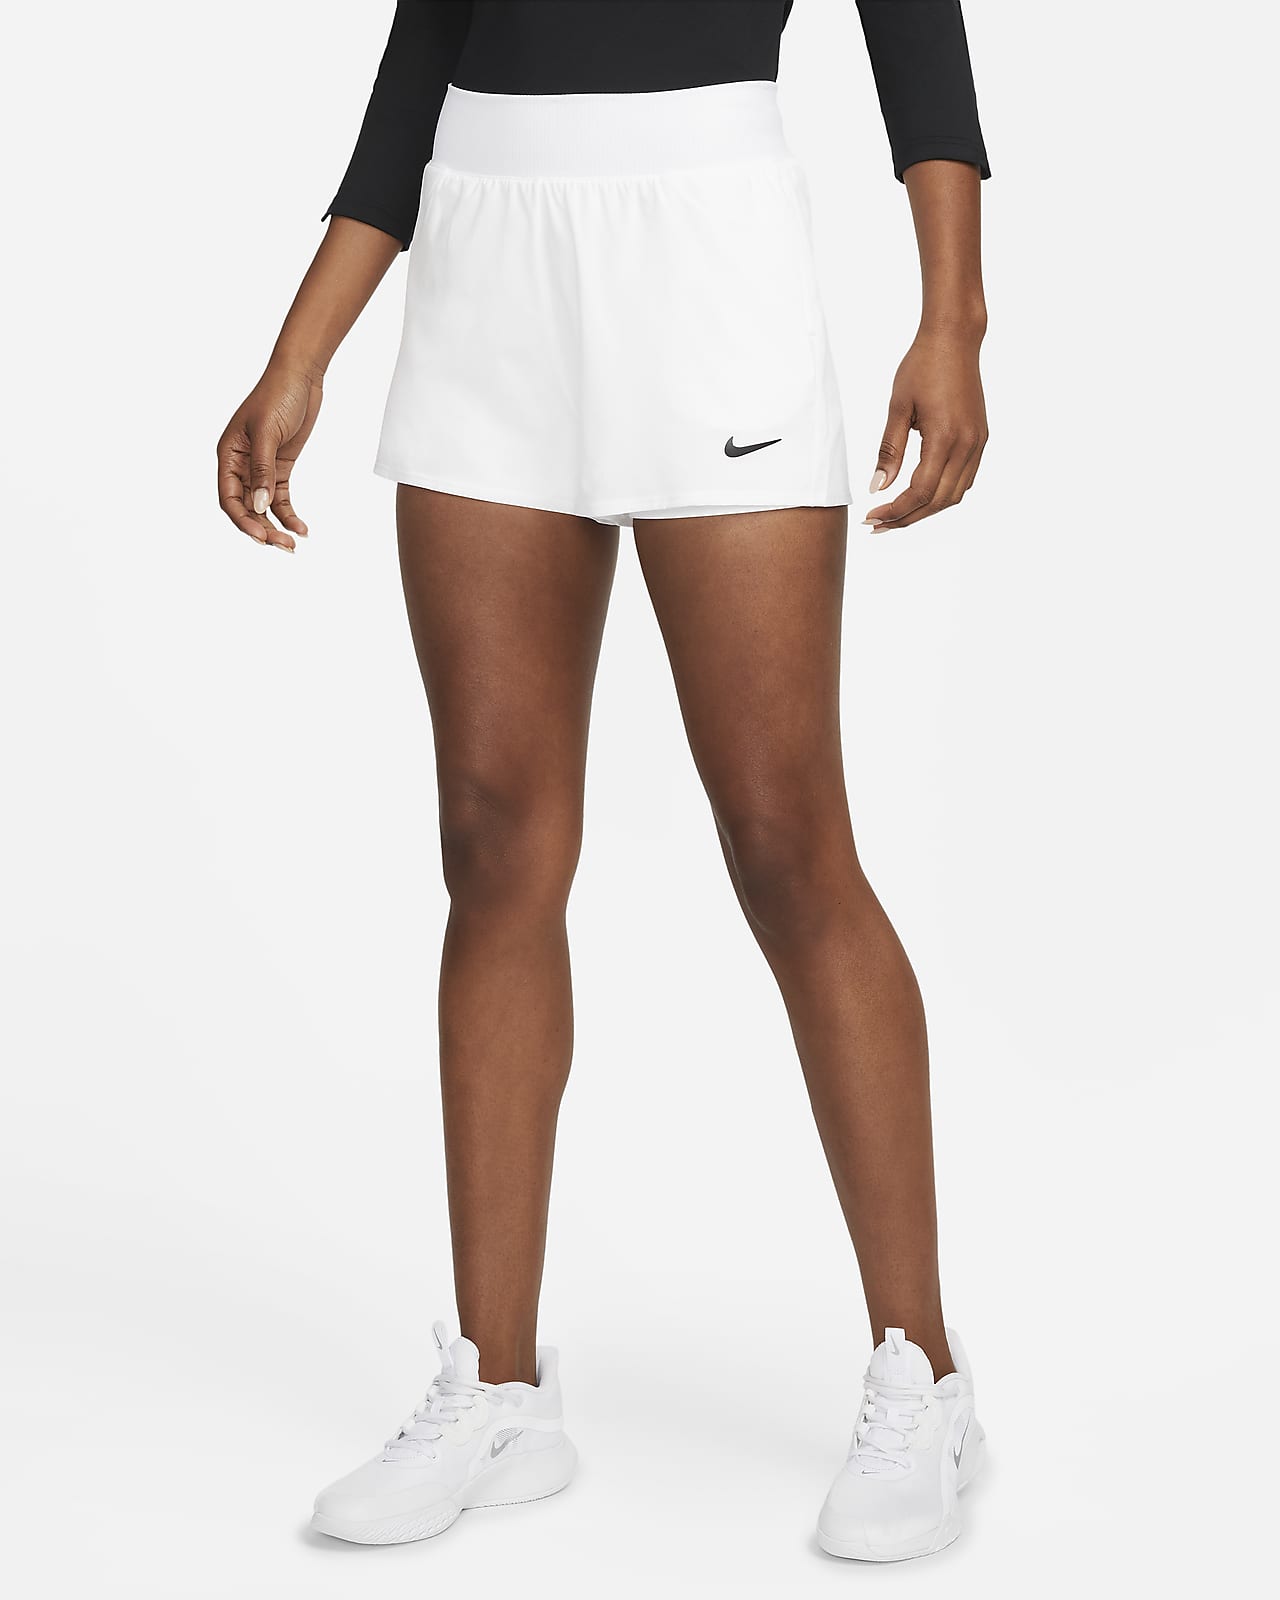 NikeCourt Tennis Shorts. Nike